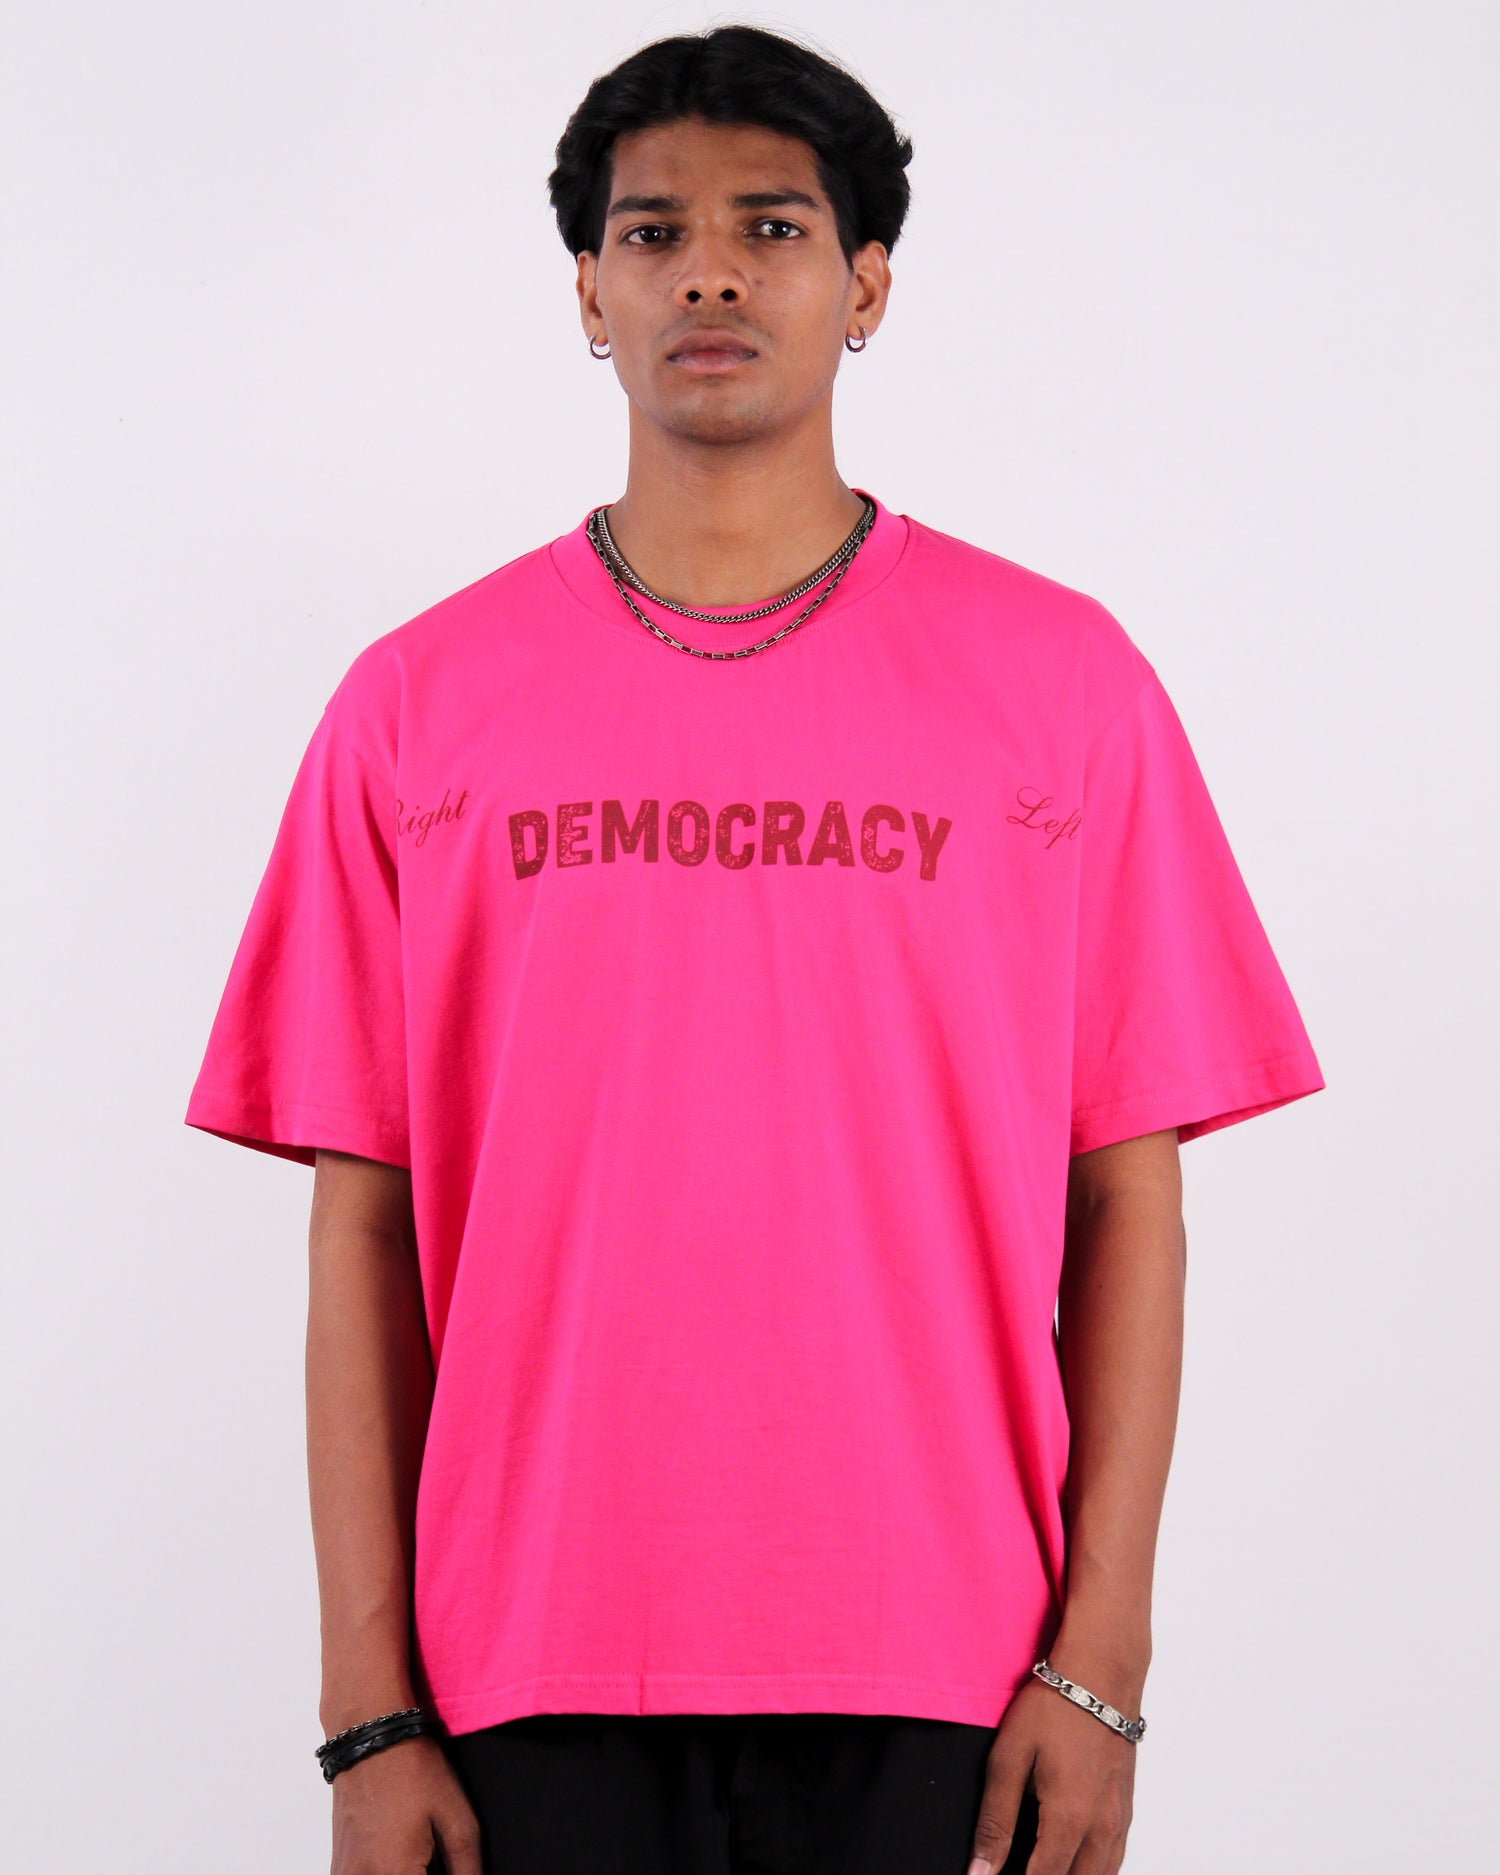 Democracy Tee (Pink)